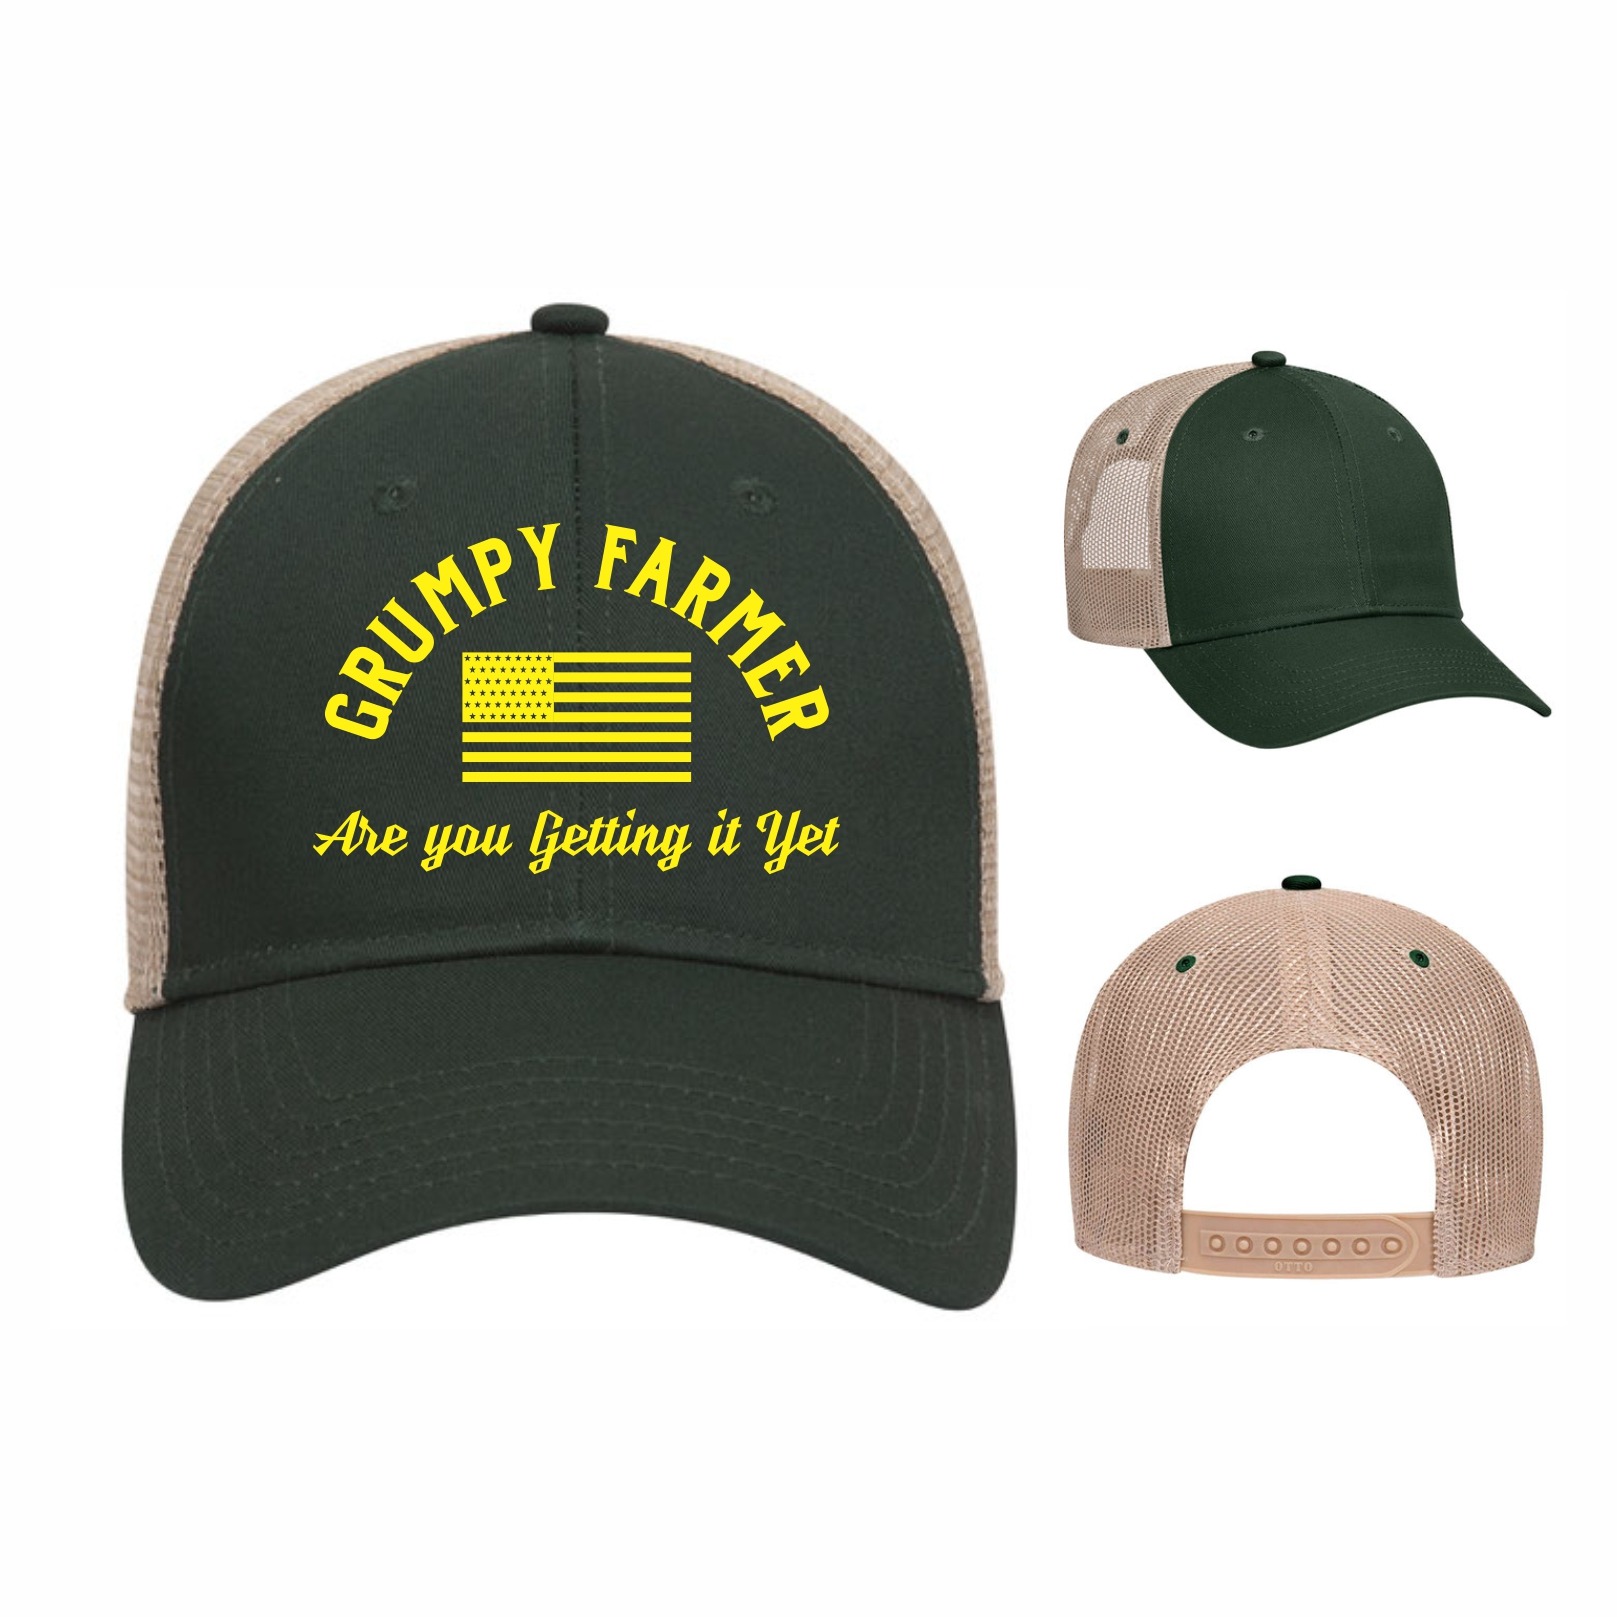 GRUMPY FARMER GREEN HATS